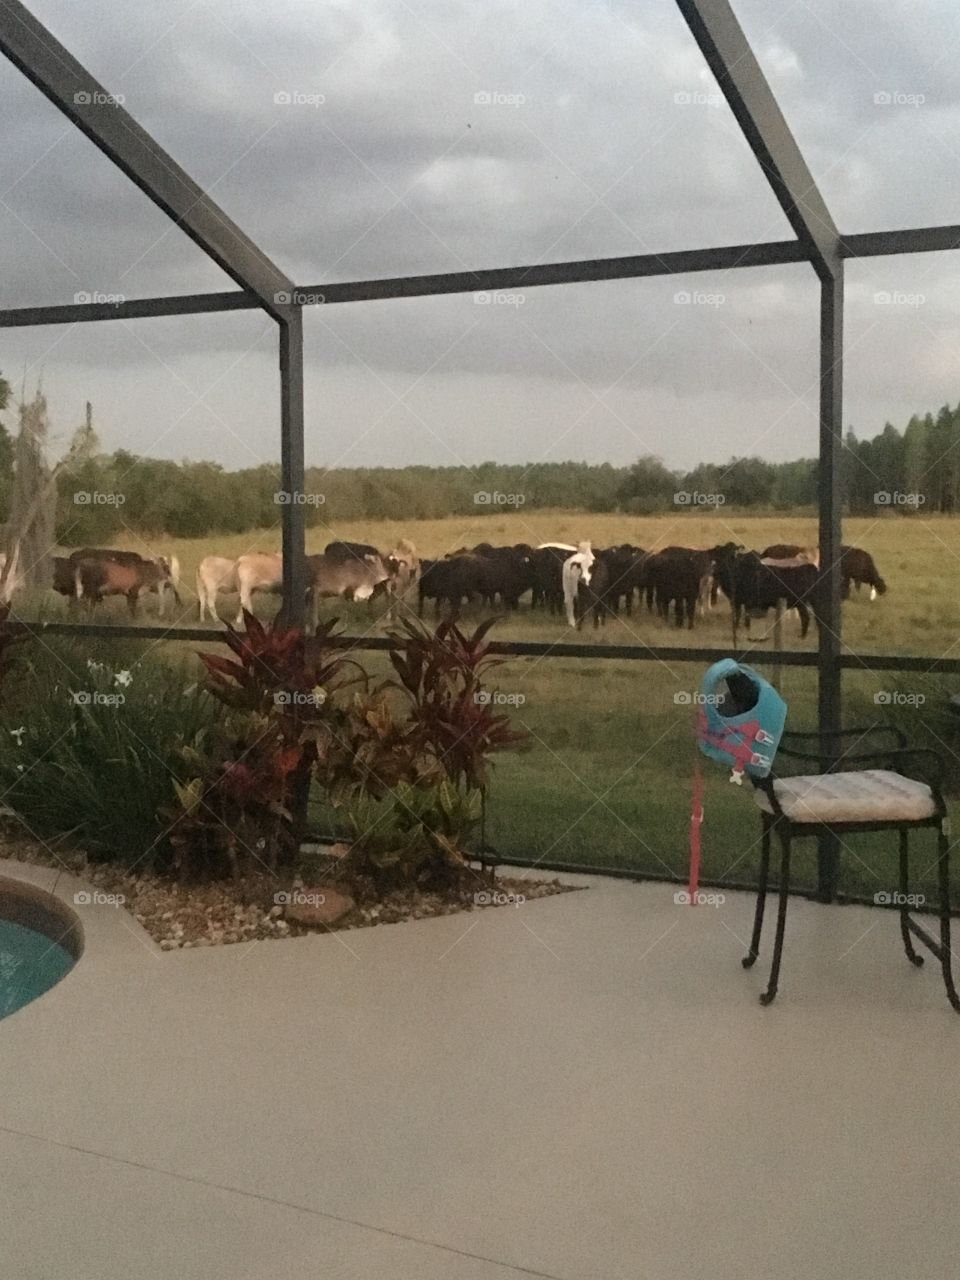 Cows in my backyard 